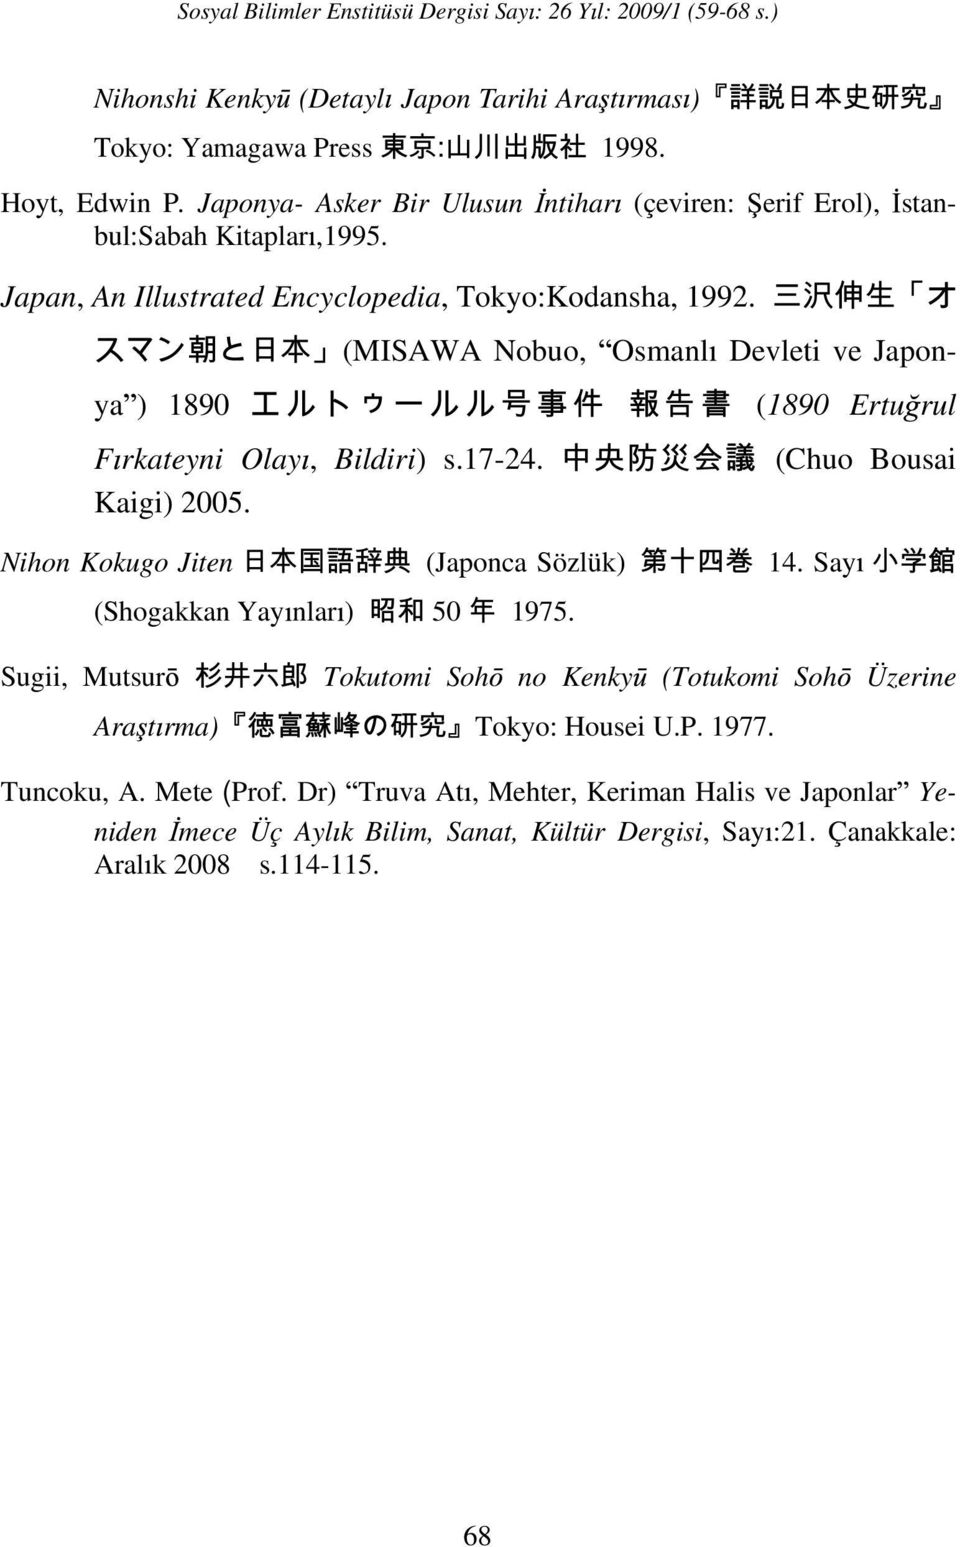 (MISAWA Nobuo, Osmanl Devleti ve Japonya ) 1890 F rkateyni Olay, Bildiri) s.17-24. Kaigi) 2005. Nihon Kokugo Jiten (Japonca Sözlük) 14. Say (Shogakkan Yay nlar ) 50 1975.